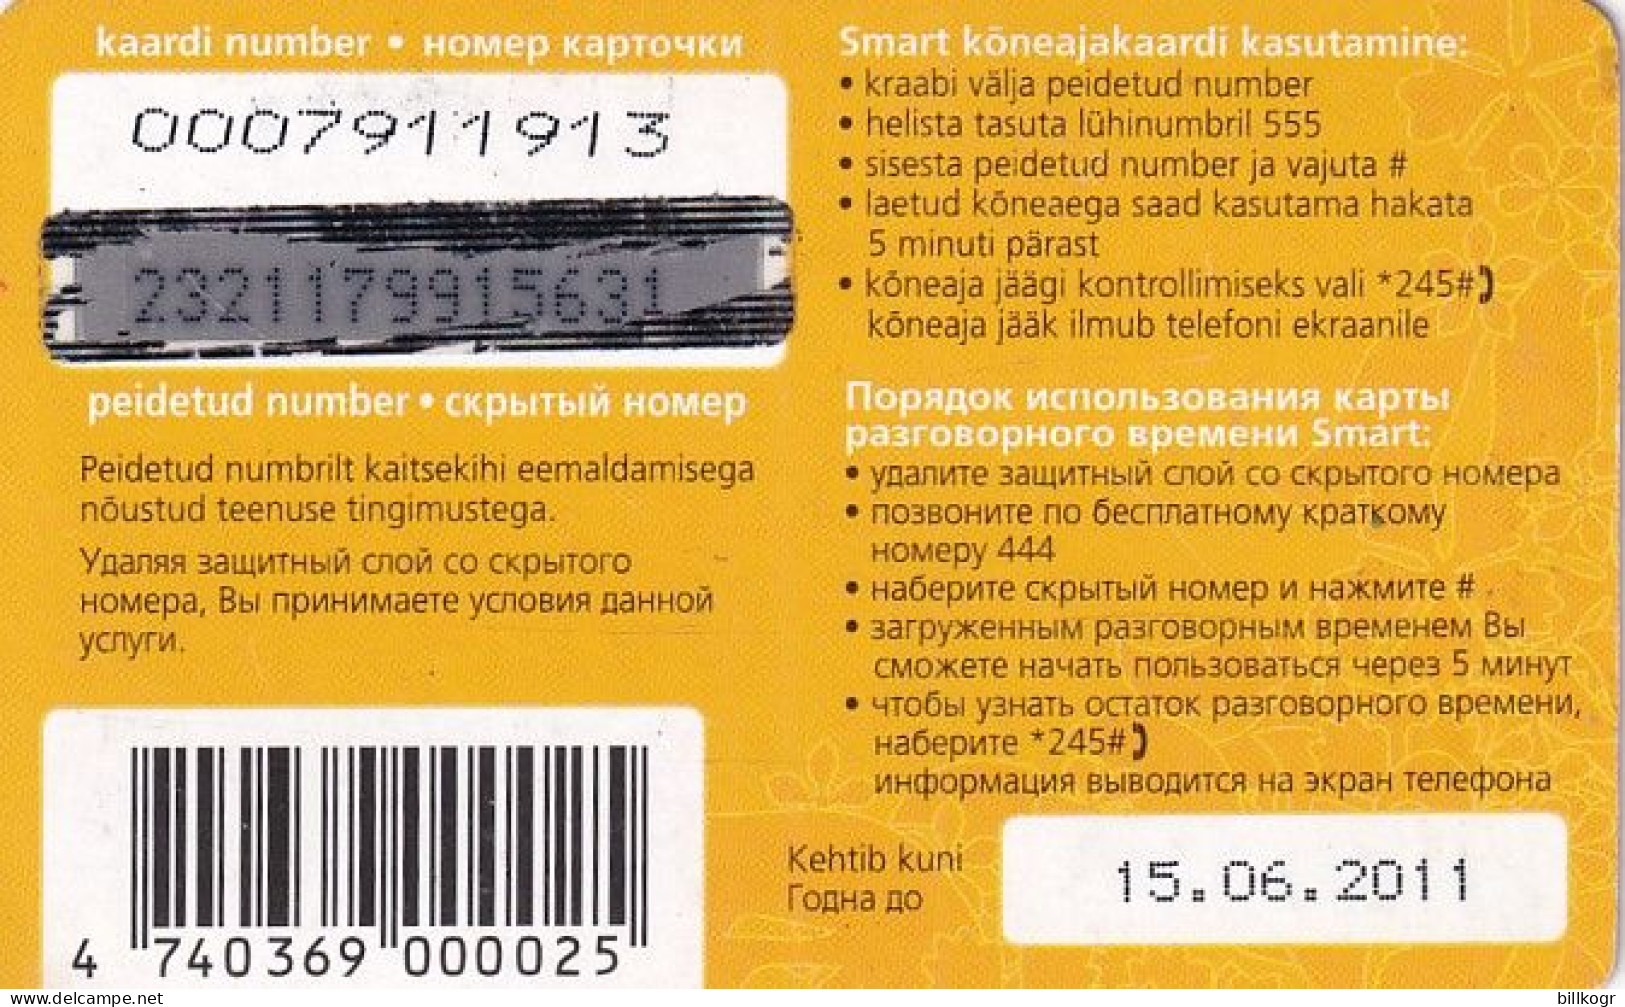 ESTONIA - Parrot, Tele2 Prepaid Card 100 Kr, Exp.date 15/06/11, Used - Estonia